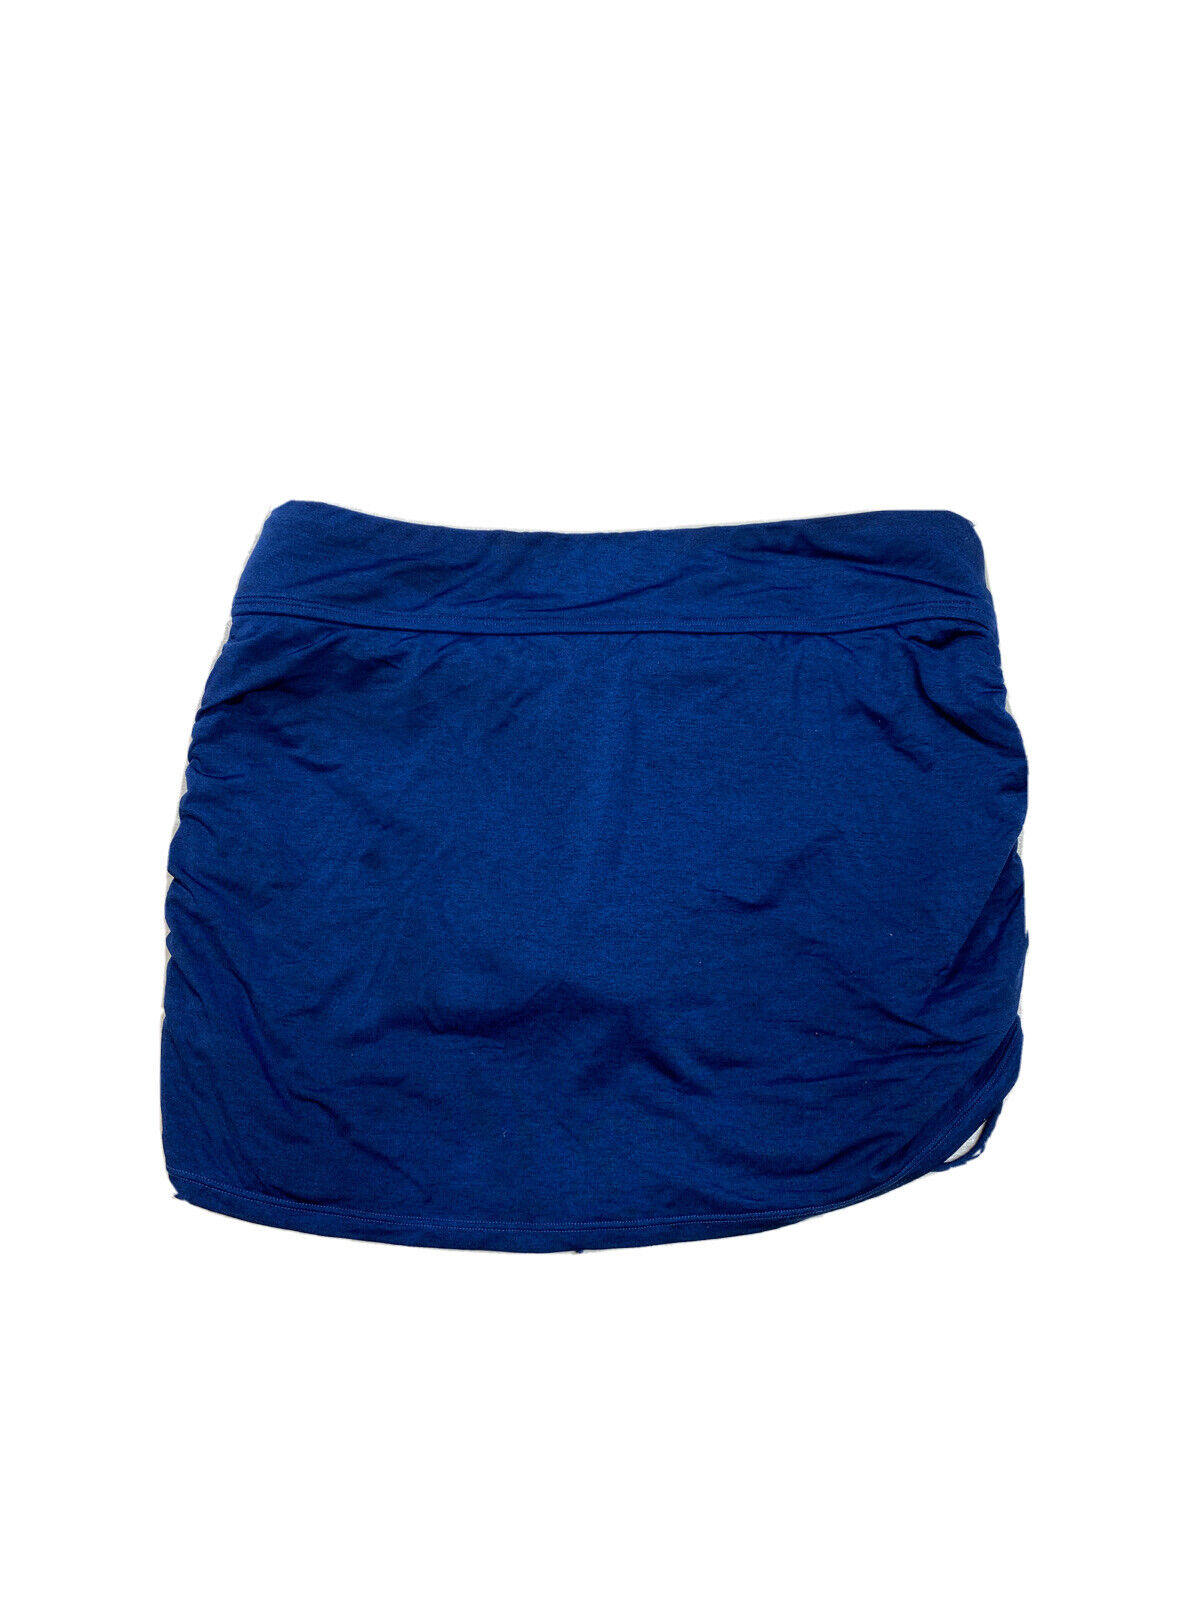 Athleta Women's Navy Blue Aqualuxe Side Scrunch Lined Swim Skirt -XS